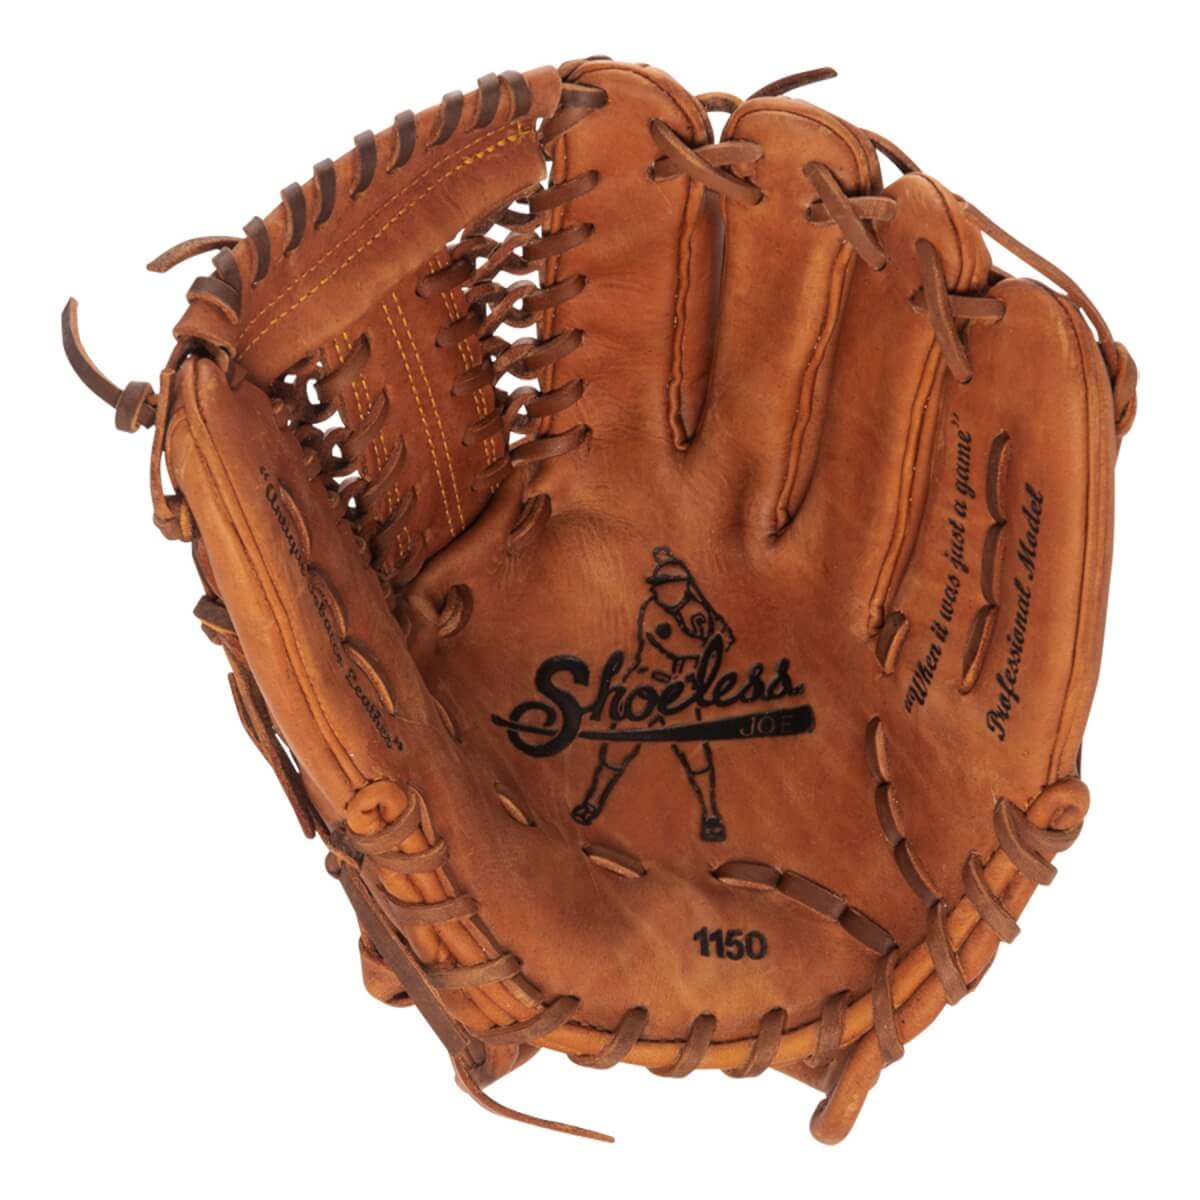 Diamond Ready Baseball Gloves Shoeless Joe Players Series 11 1//2 I Web Glove